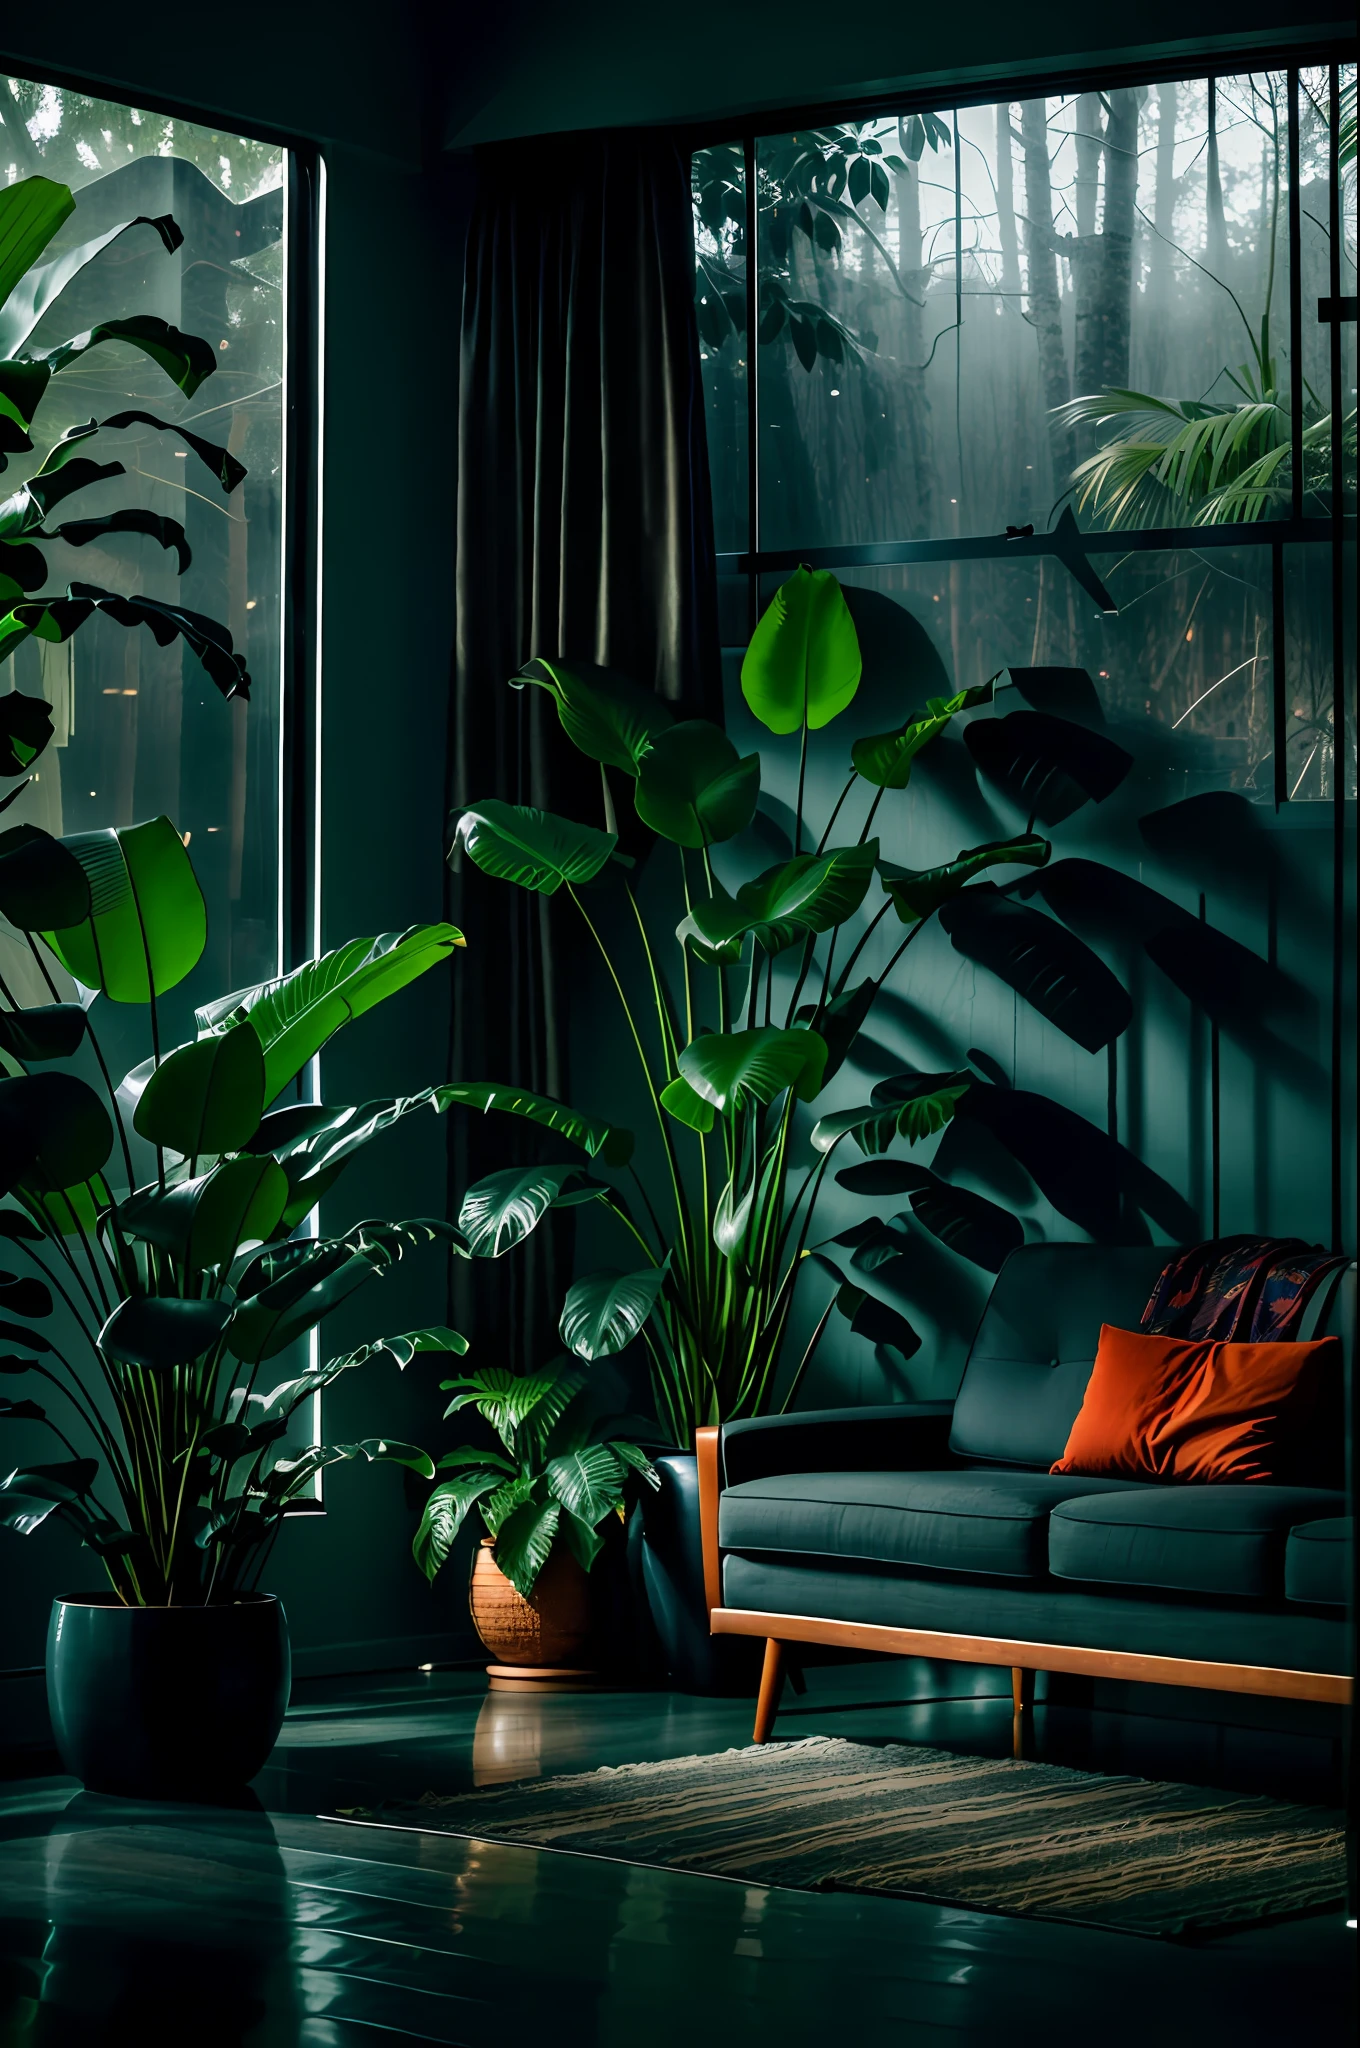 midcentury modern living room dimly lit with dark ฝนตก evening outside, (foggy ฝนตก evening:1.2), แปซิฟิกตะวันตกเฉียงเหนือ, (แสงสลัว:1.4), (แสงอารมณ์:1.2), พืช, large พืช, ฝนตก, สัตว์ประหลาด, many พืช, (หน้าต่างมีหมอก:1.2), ผลงานชิ้นเอก, คุณภาพดีที่สุด, ชั่วโมงพลบค่ำ, (ตอนกลางคืน:1.4), ฝนตก evening, หลังพระอาทิตย์ตก,